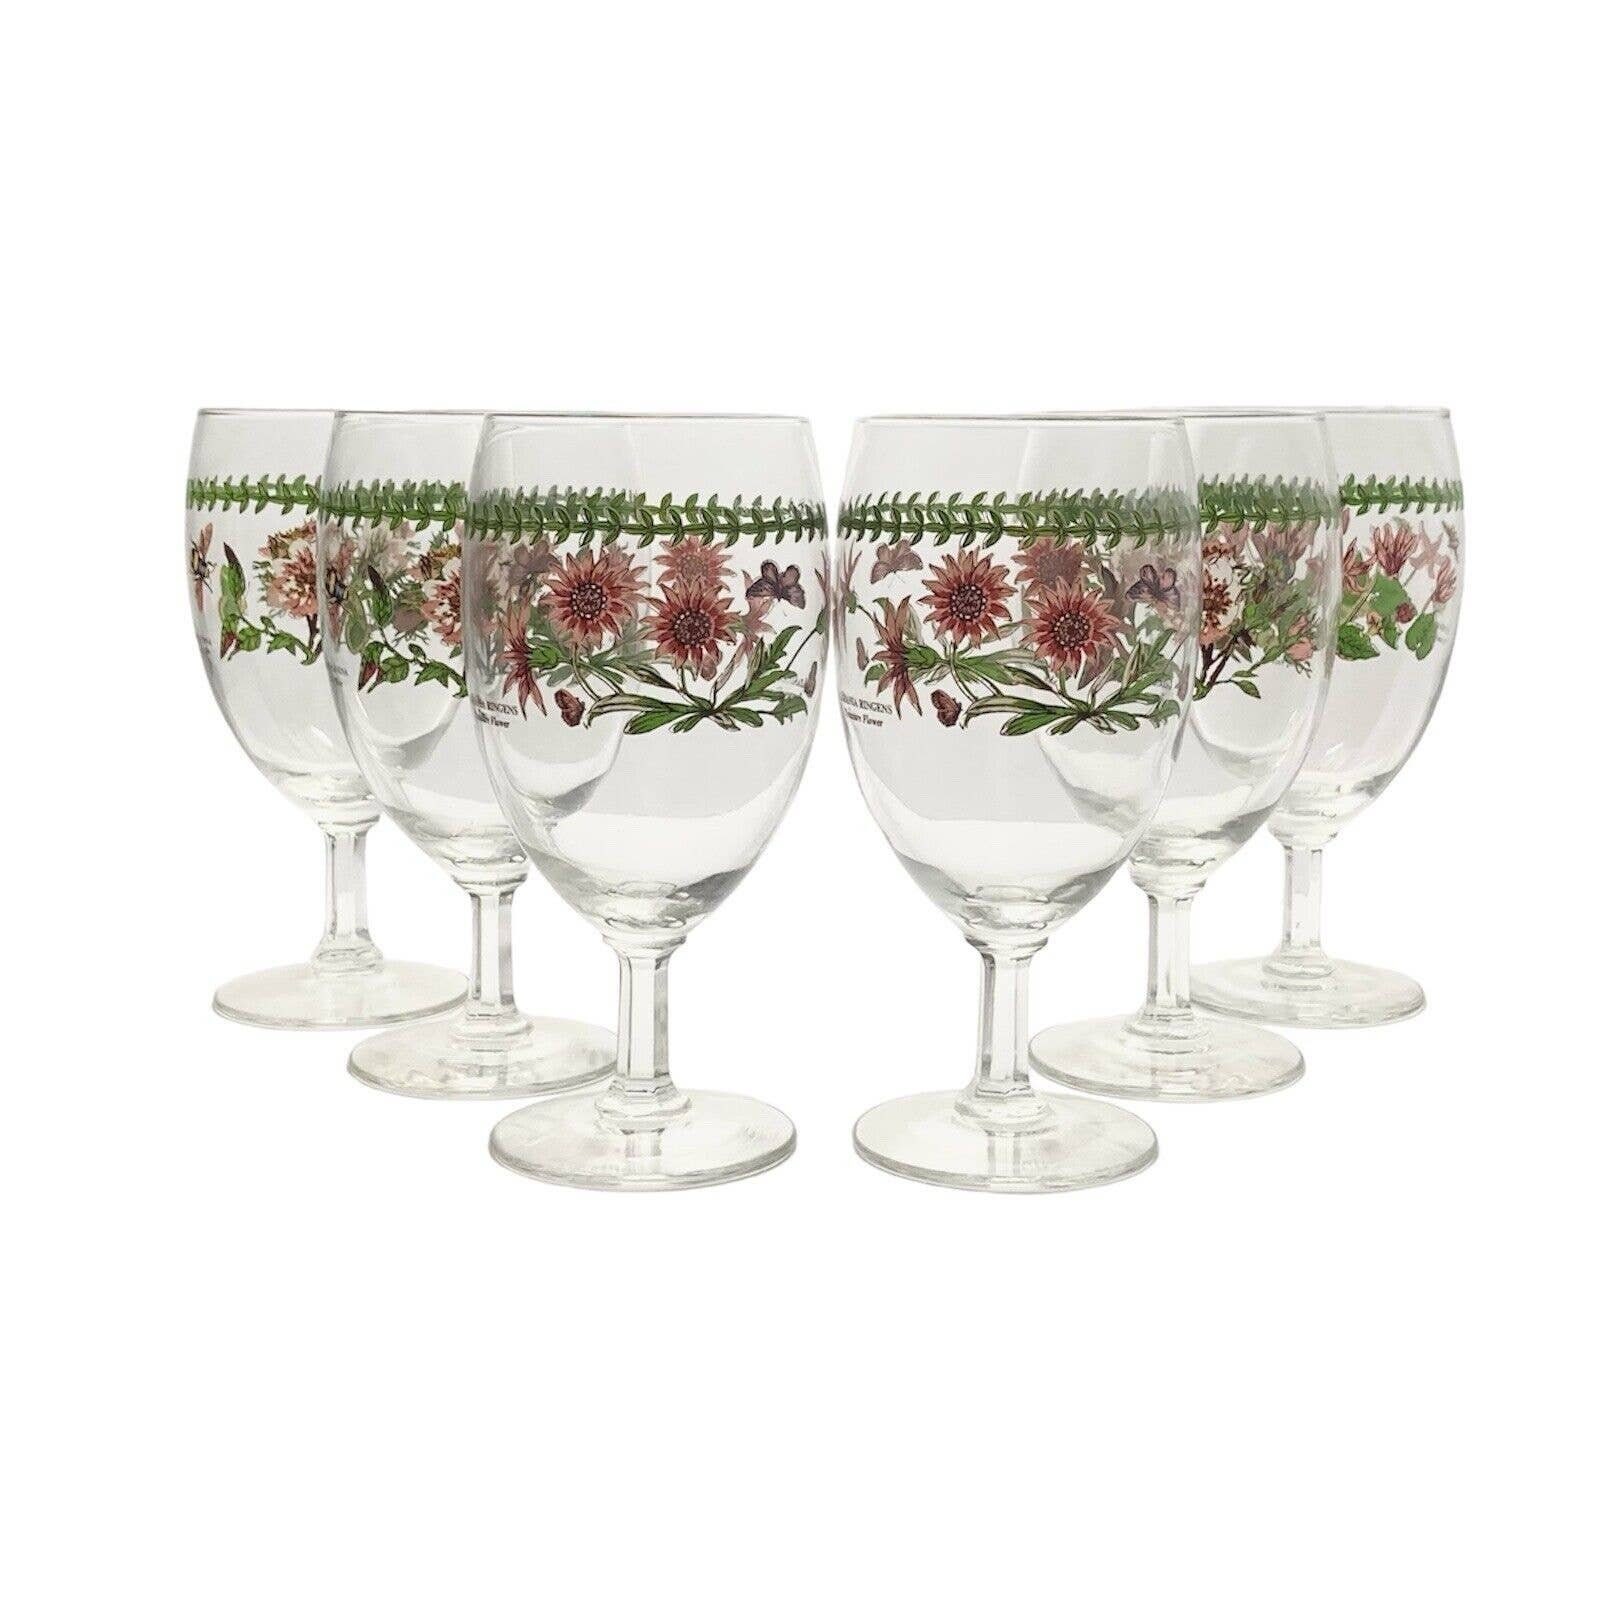 Botanic Garden 19 Ounce Set of 4 Stemless Wine Glasses (Assorted)